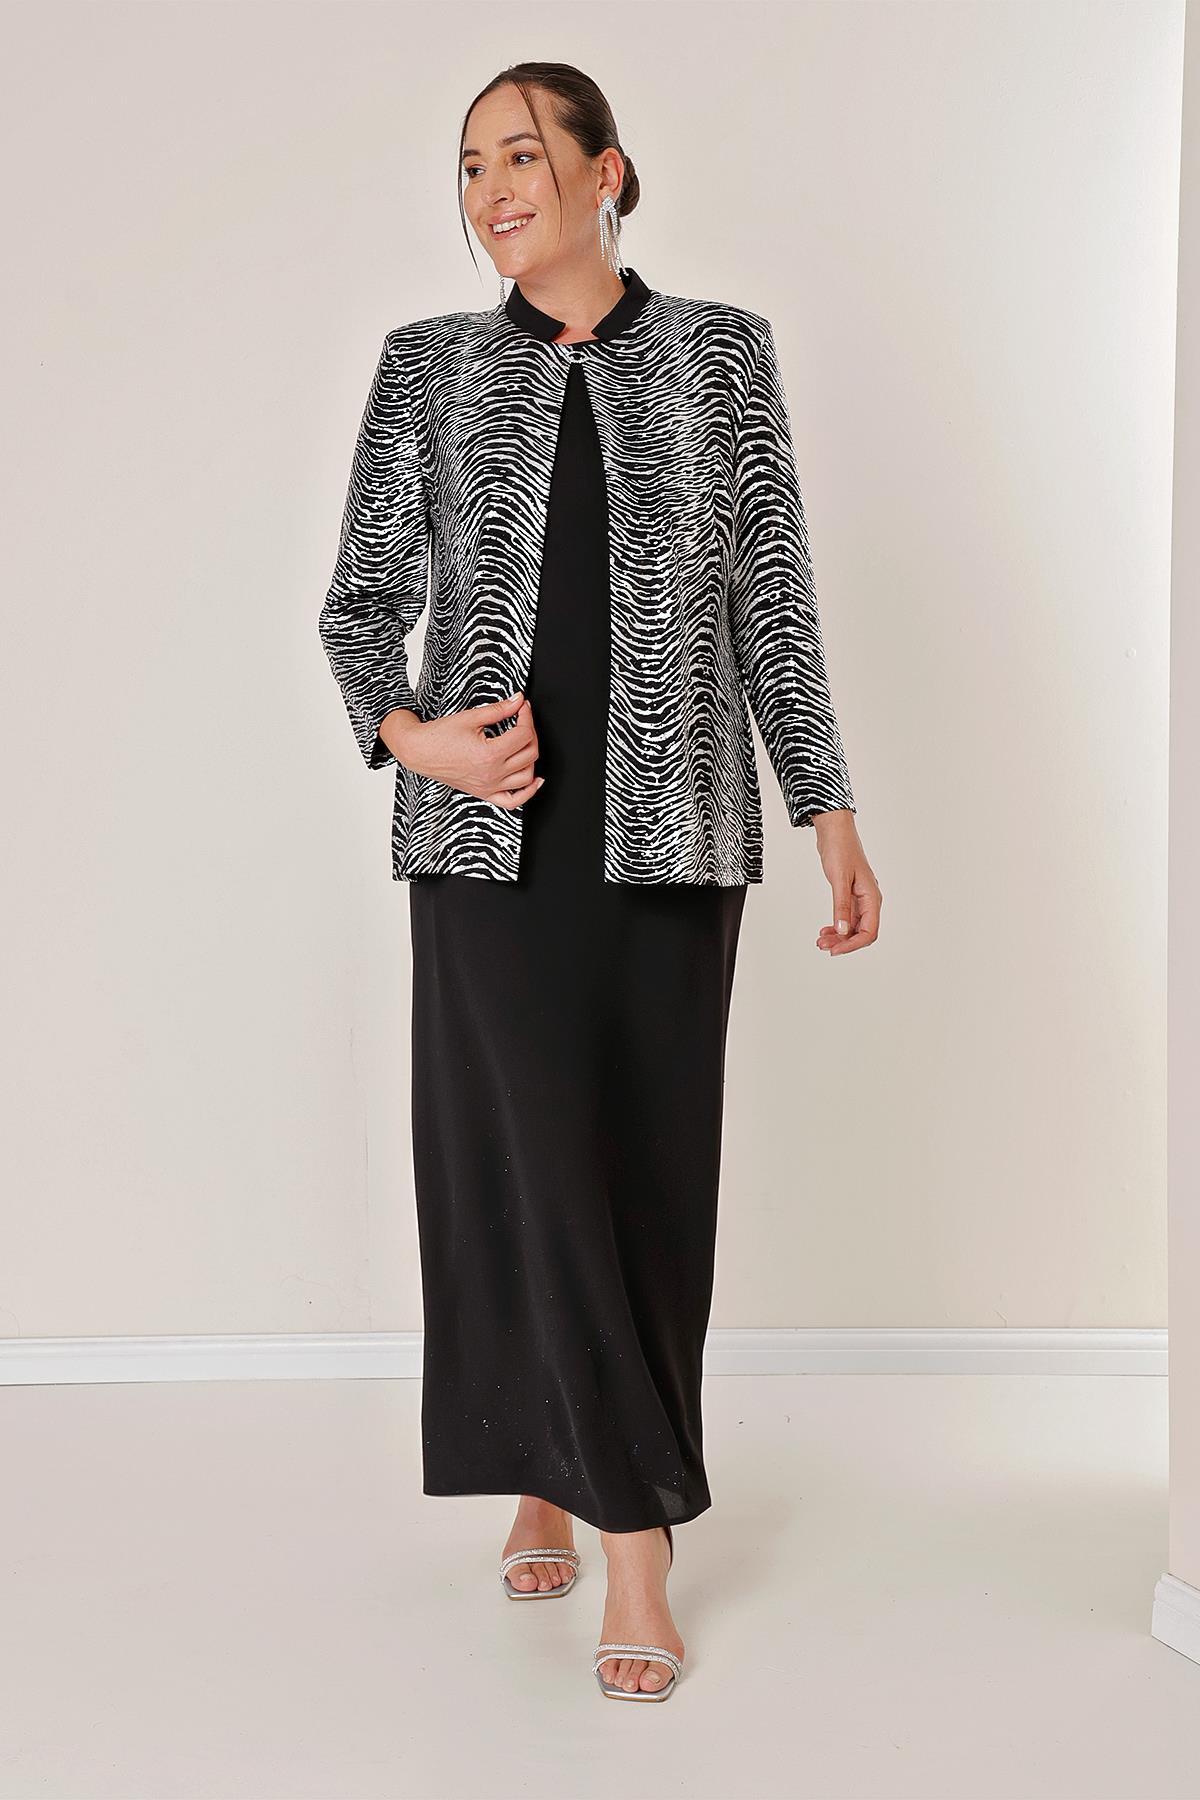 Levně By Saygı Sleeveless Long Lined Crepe Dress Zebra Patterned Foil Sequin Jacket B.B. Double Suit